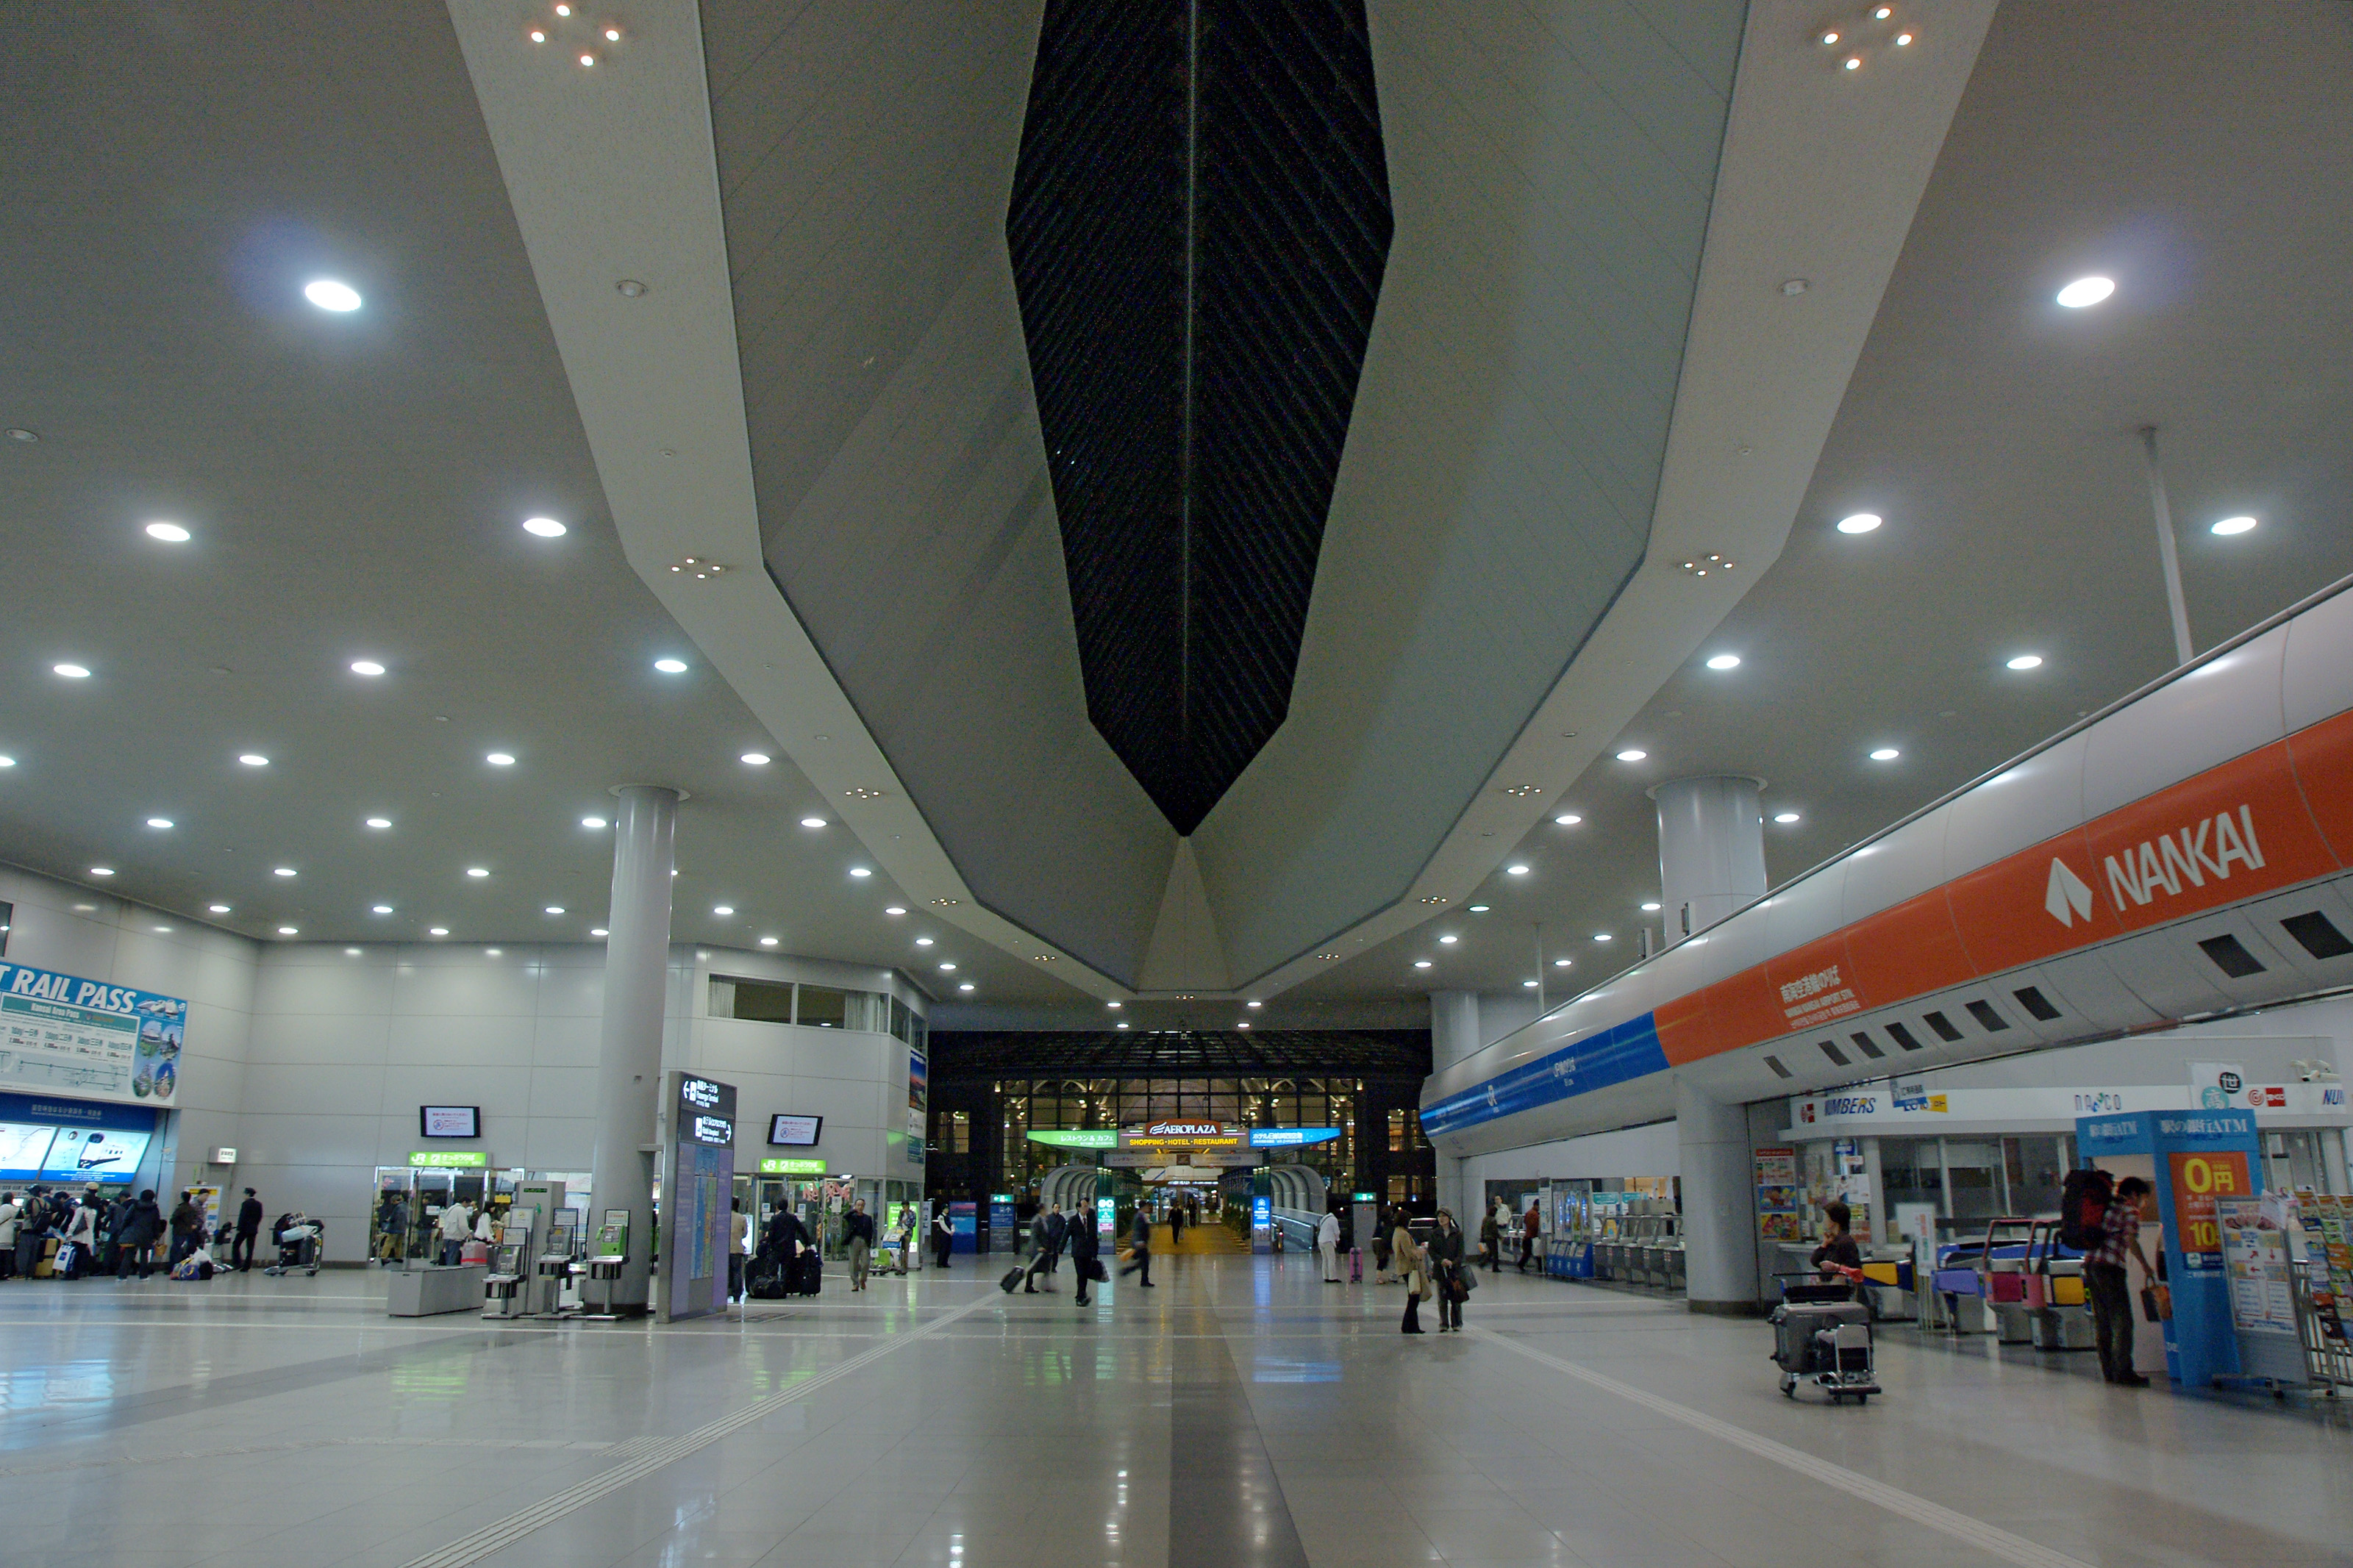 Kansai_Airport_Station01s5s3200.jpg